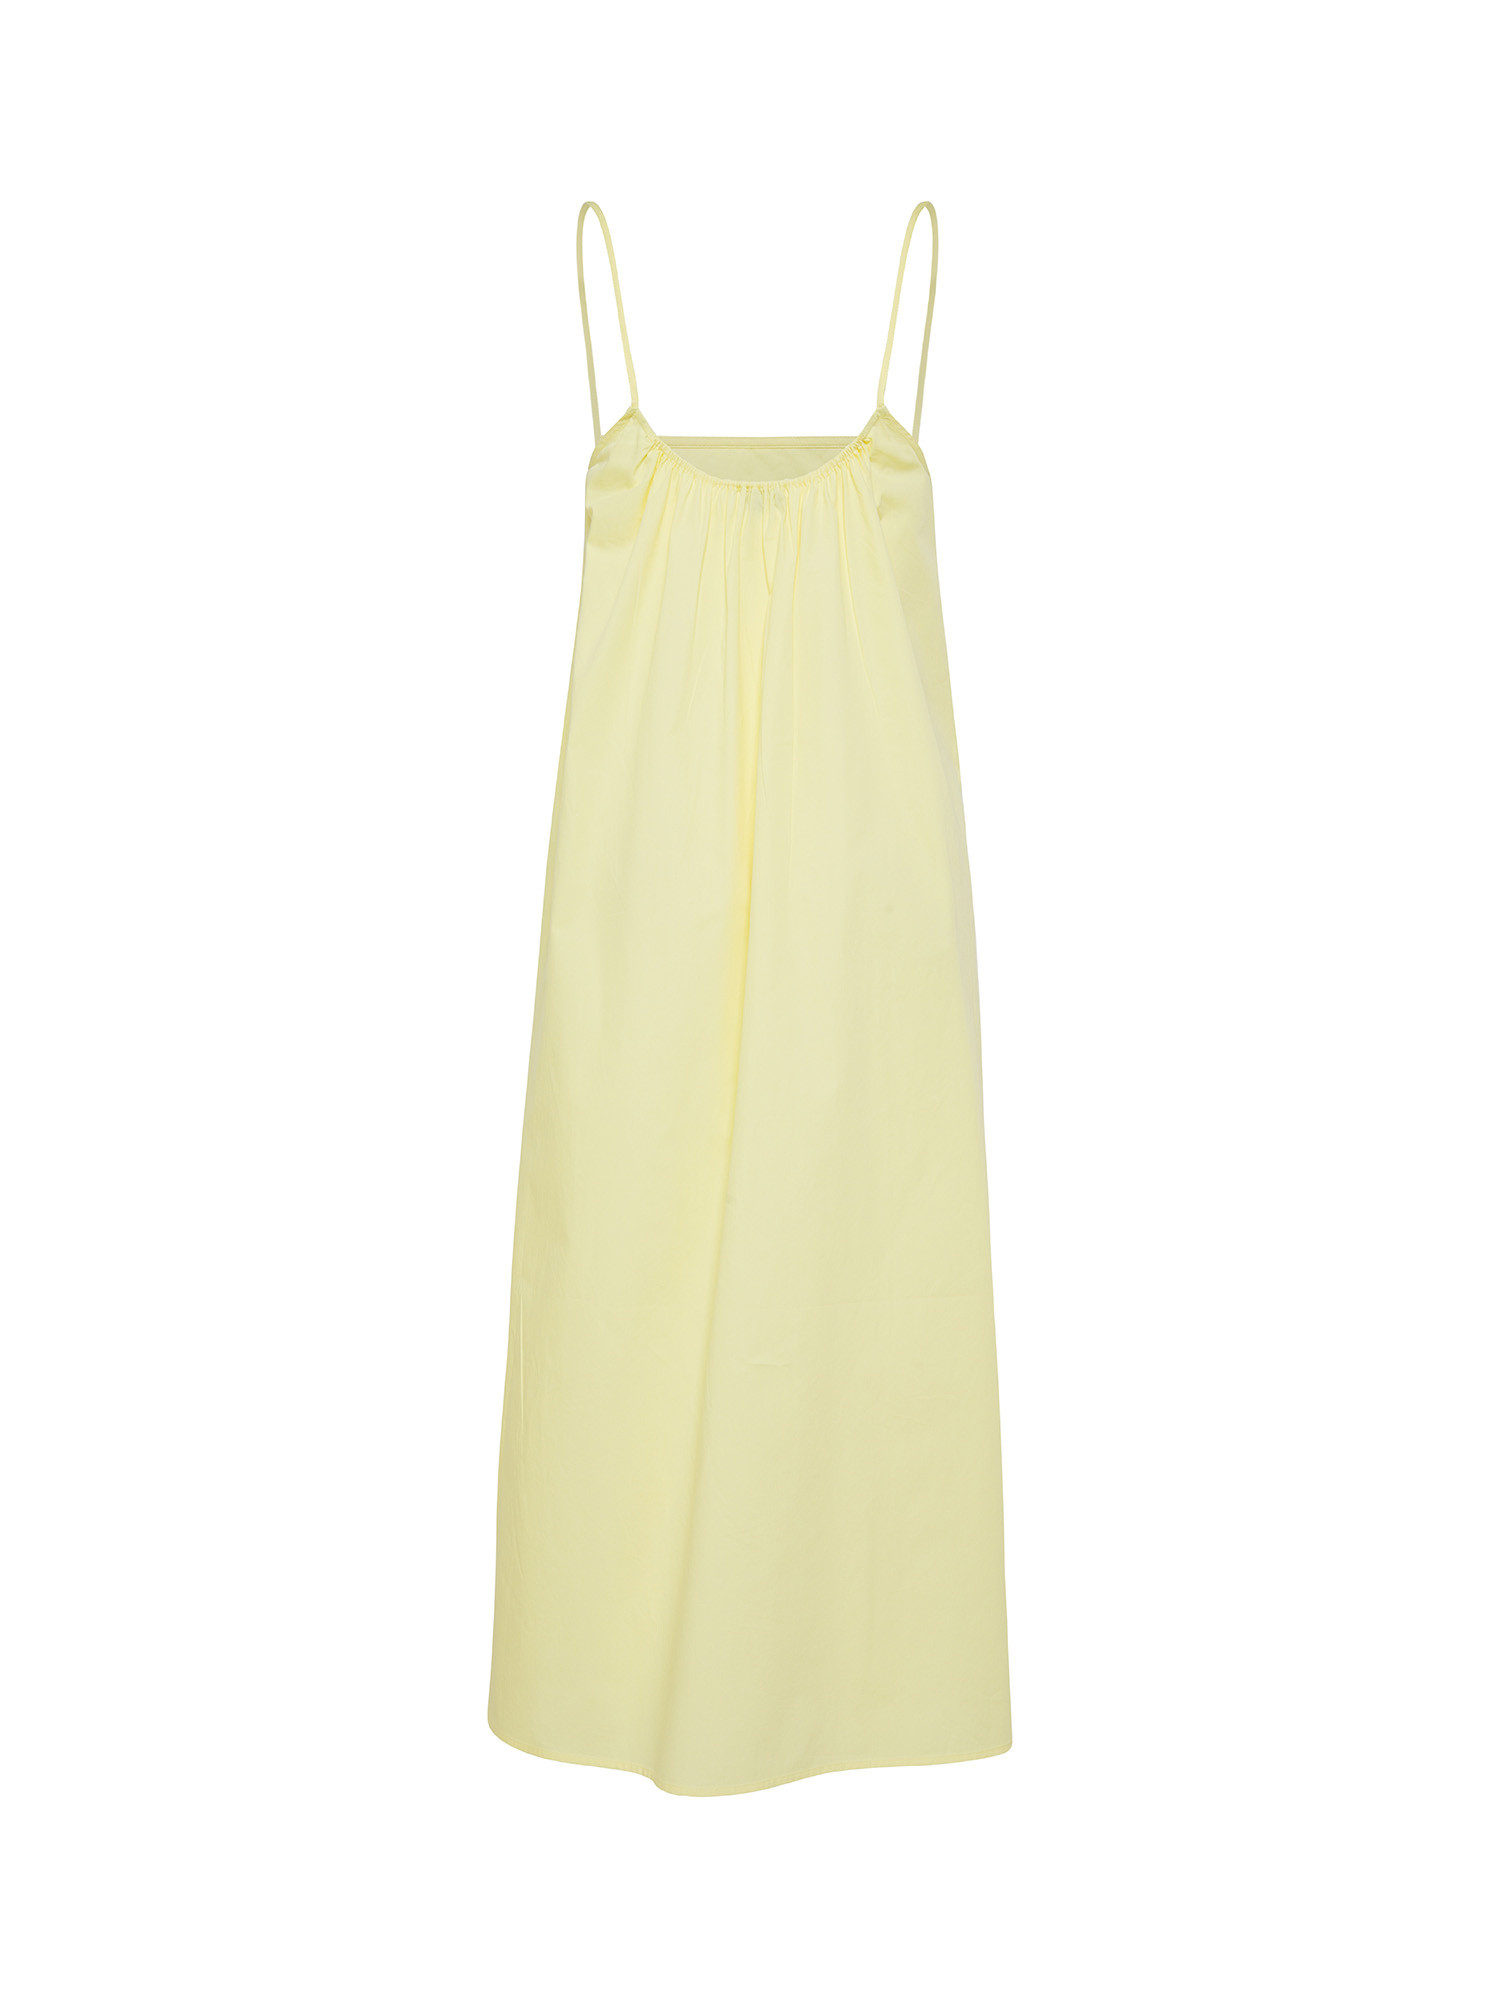 Ecoalf - Oversized Pearl dress, Yellow, large image number 1